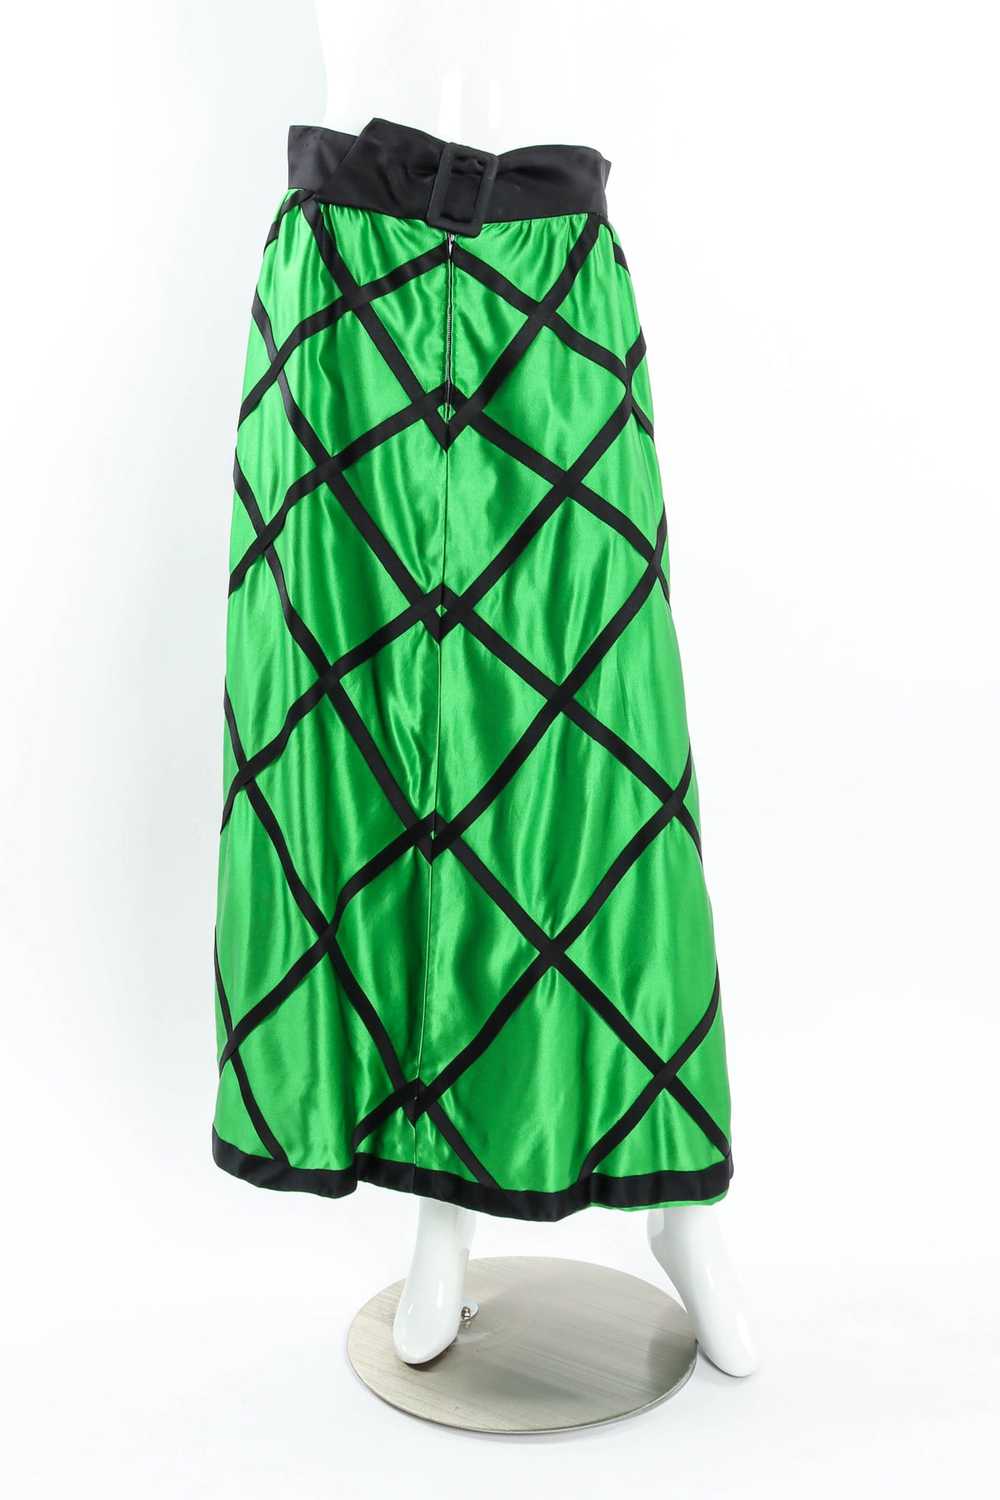 JERRY SILVERMAN Checker Print Hostess Skirt - image 1